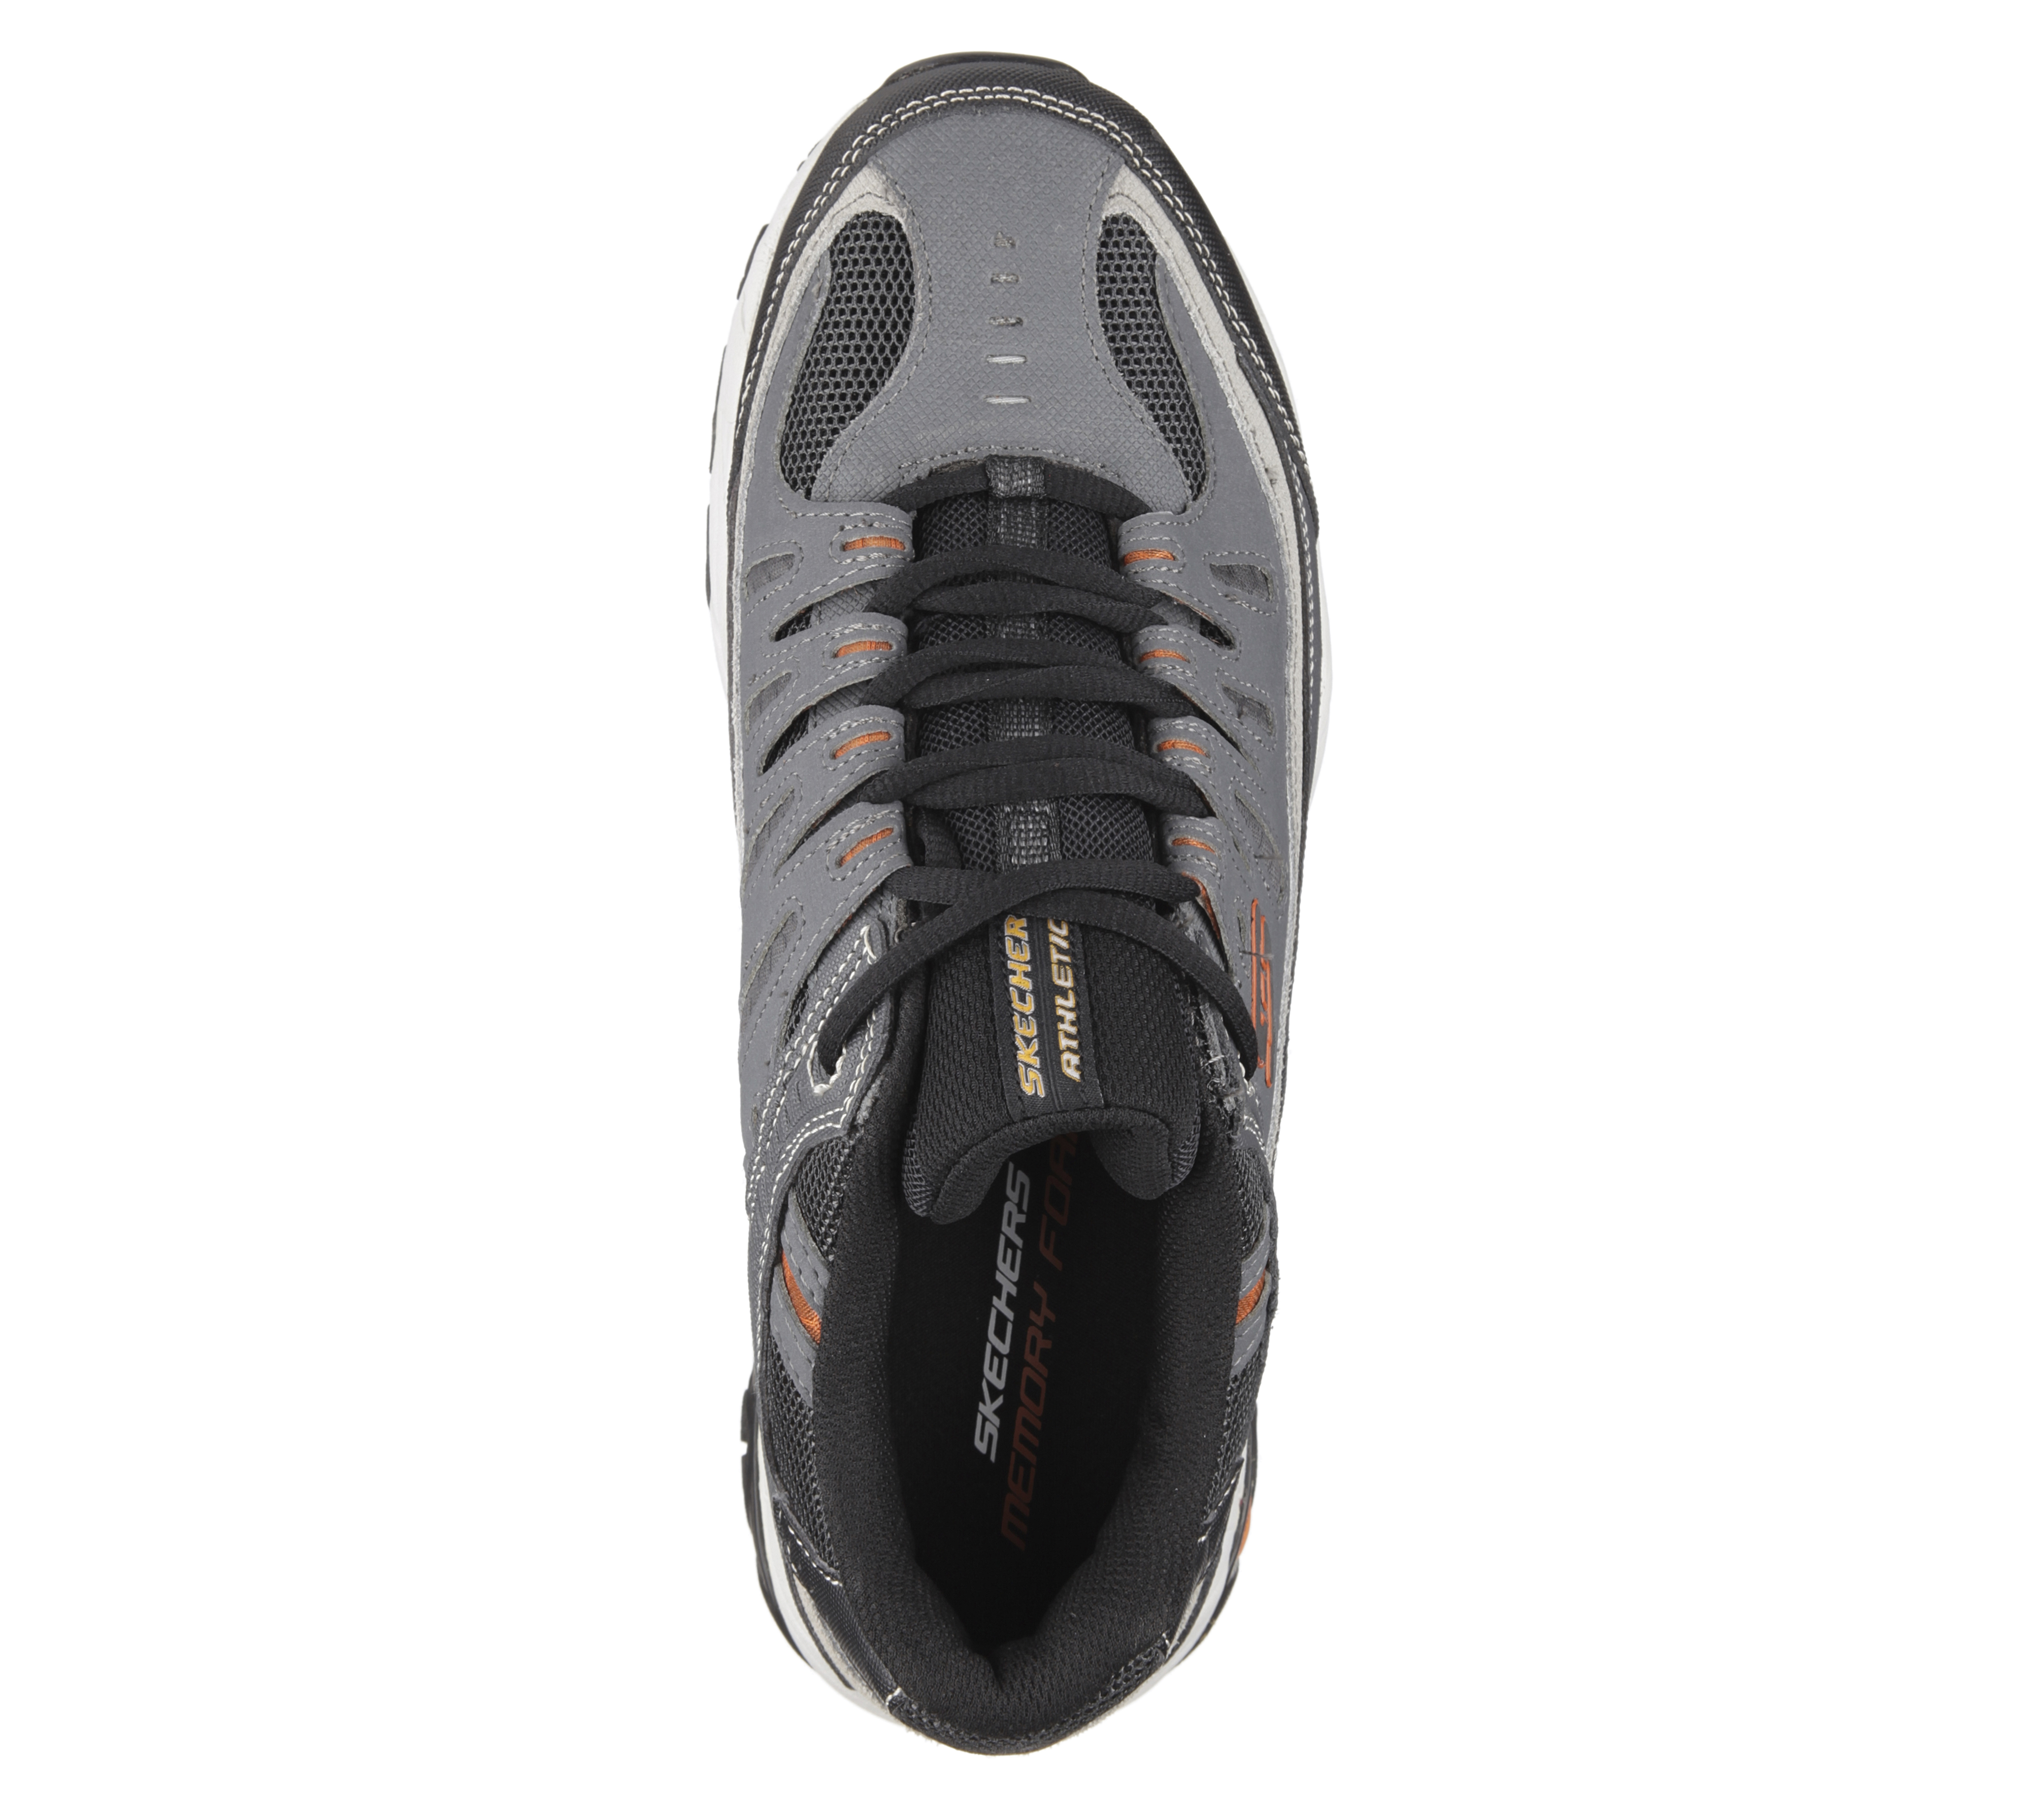 Skechers Men's After Burn - Memory Fit Sneakers, Charcoal, 11.5